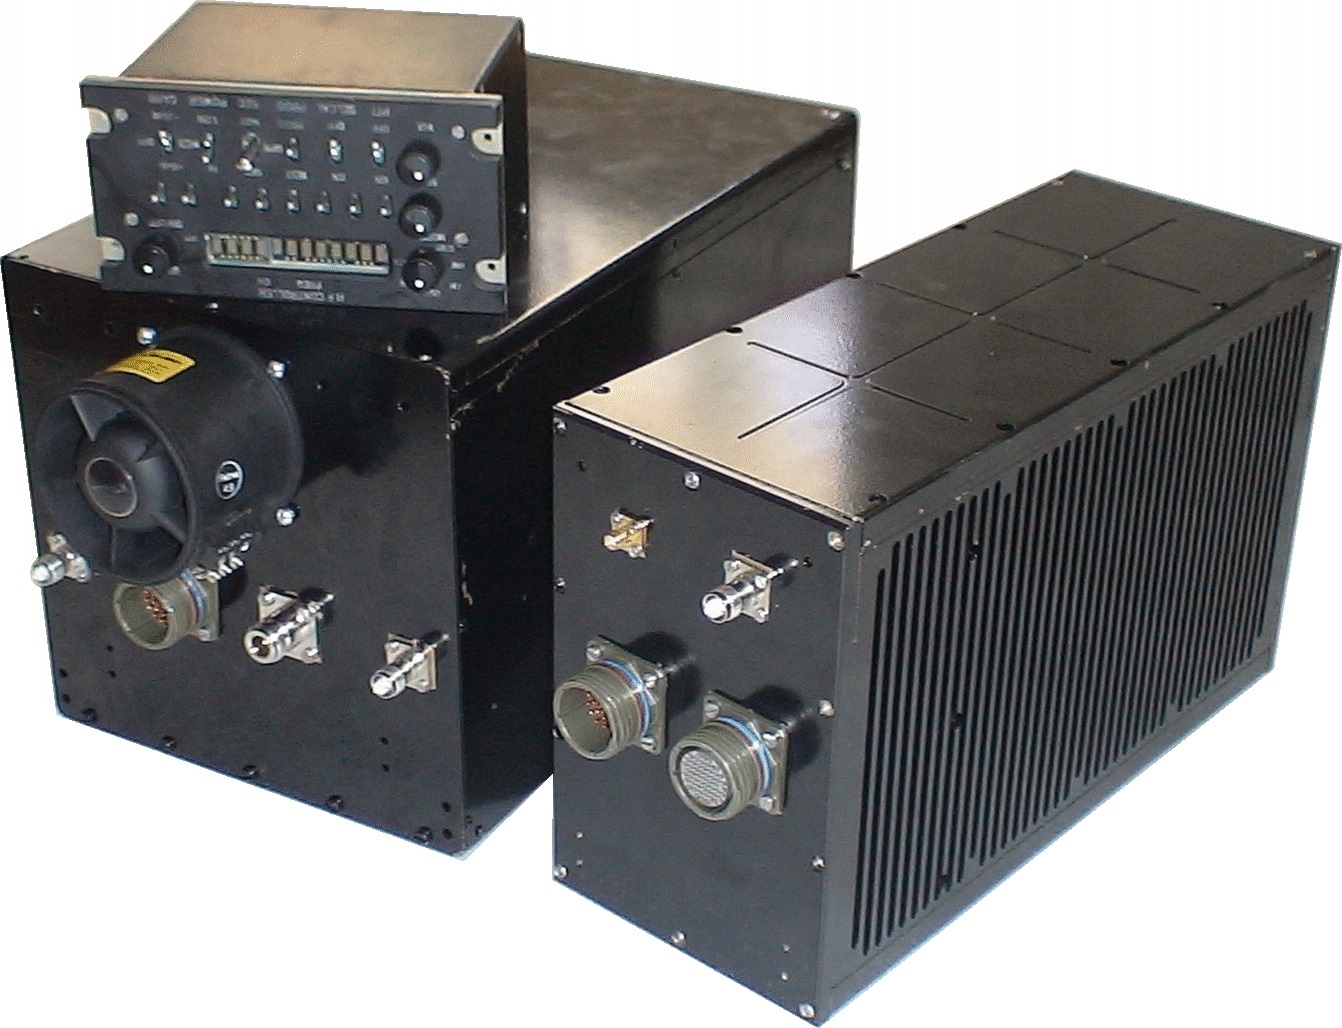 HF Communication Equipment